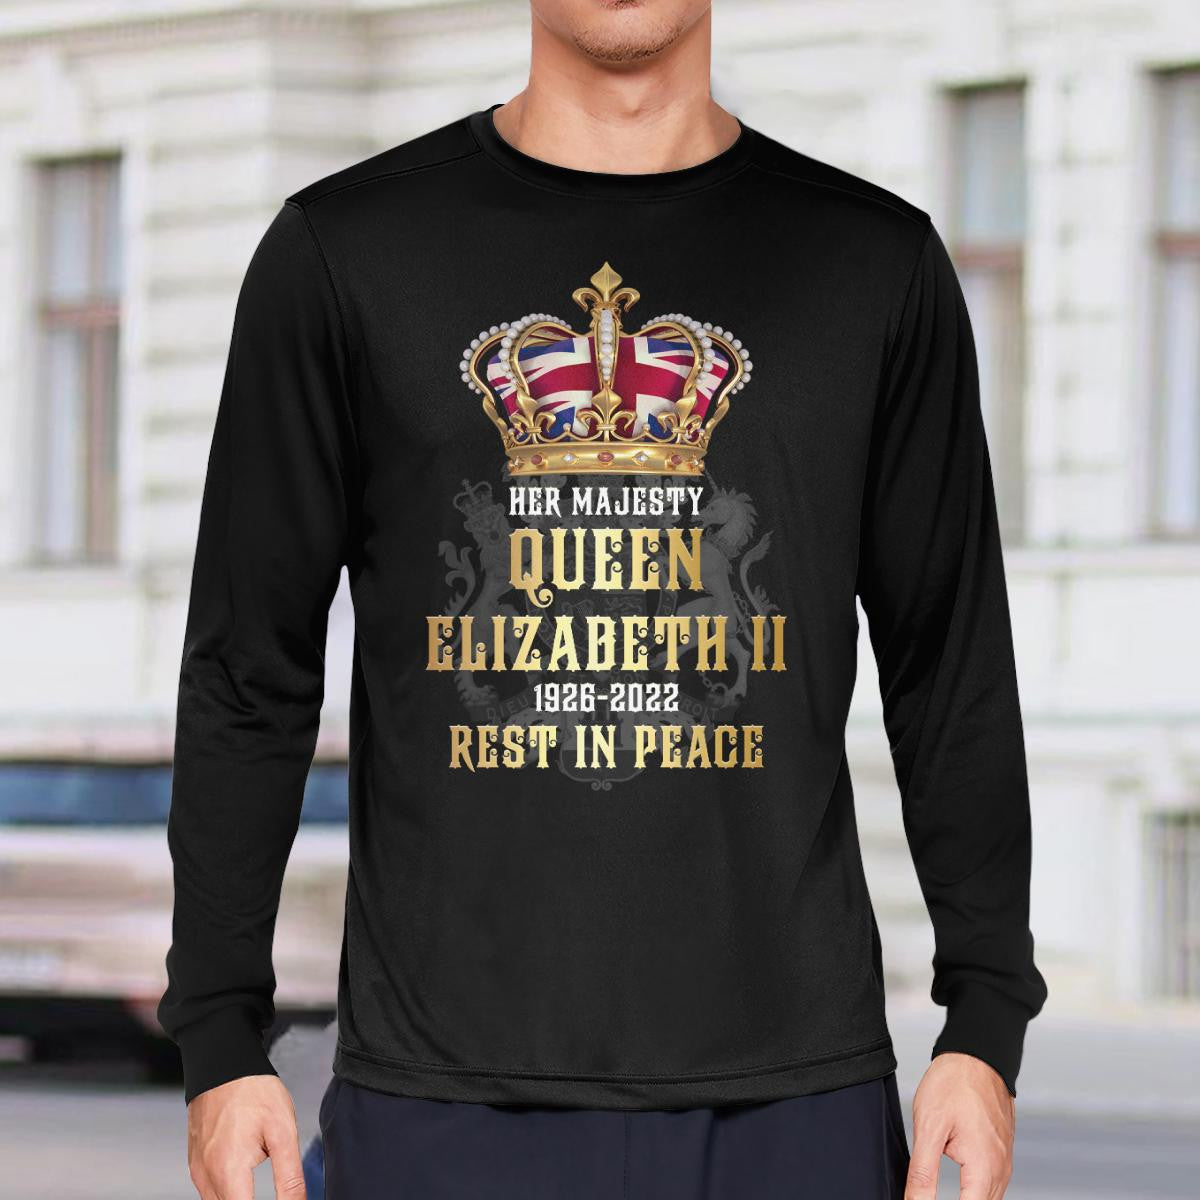 Her Majesty Queen Elizabeth Ii, Rest In Peace, Memory About Queen Elizabeth Ii T-Shirt